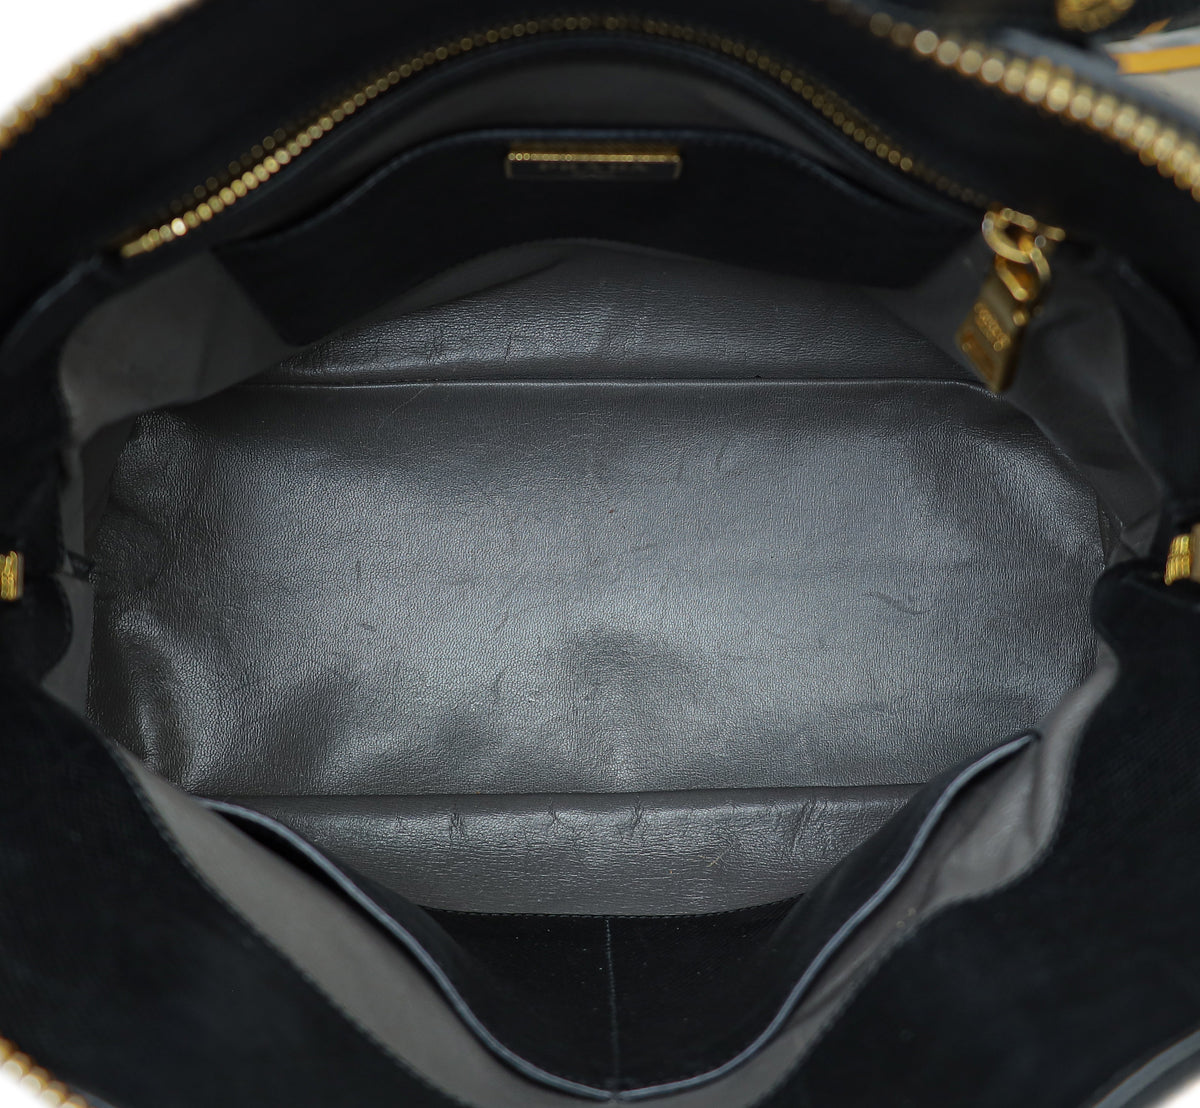 Load image into Gallery viewer, Prada Black Cuir Dome Satchel Bag
